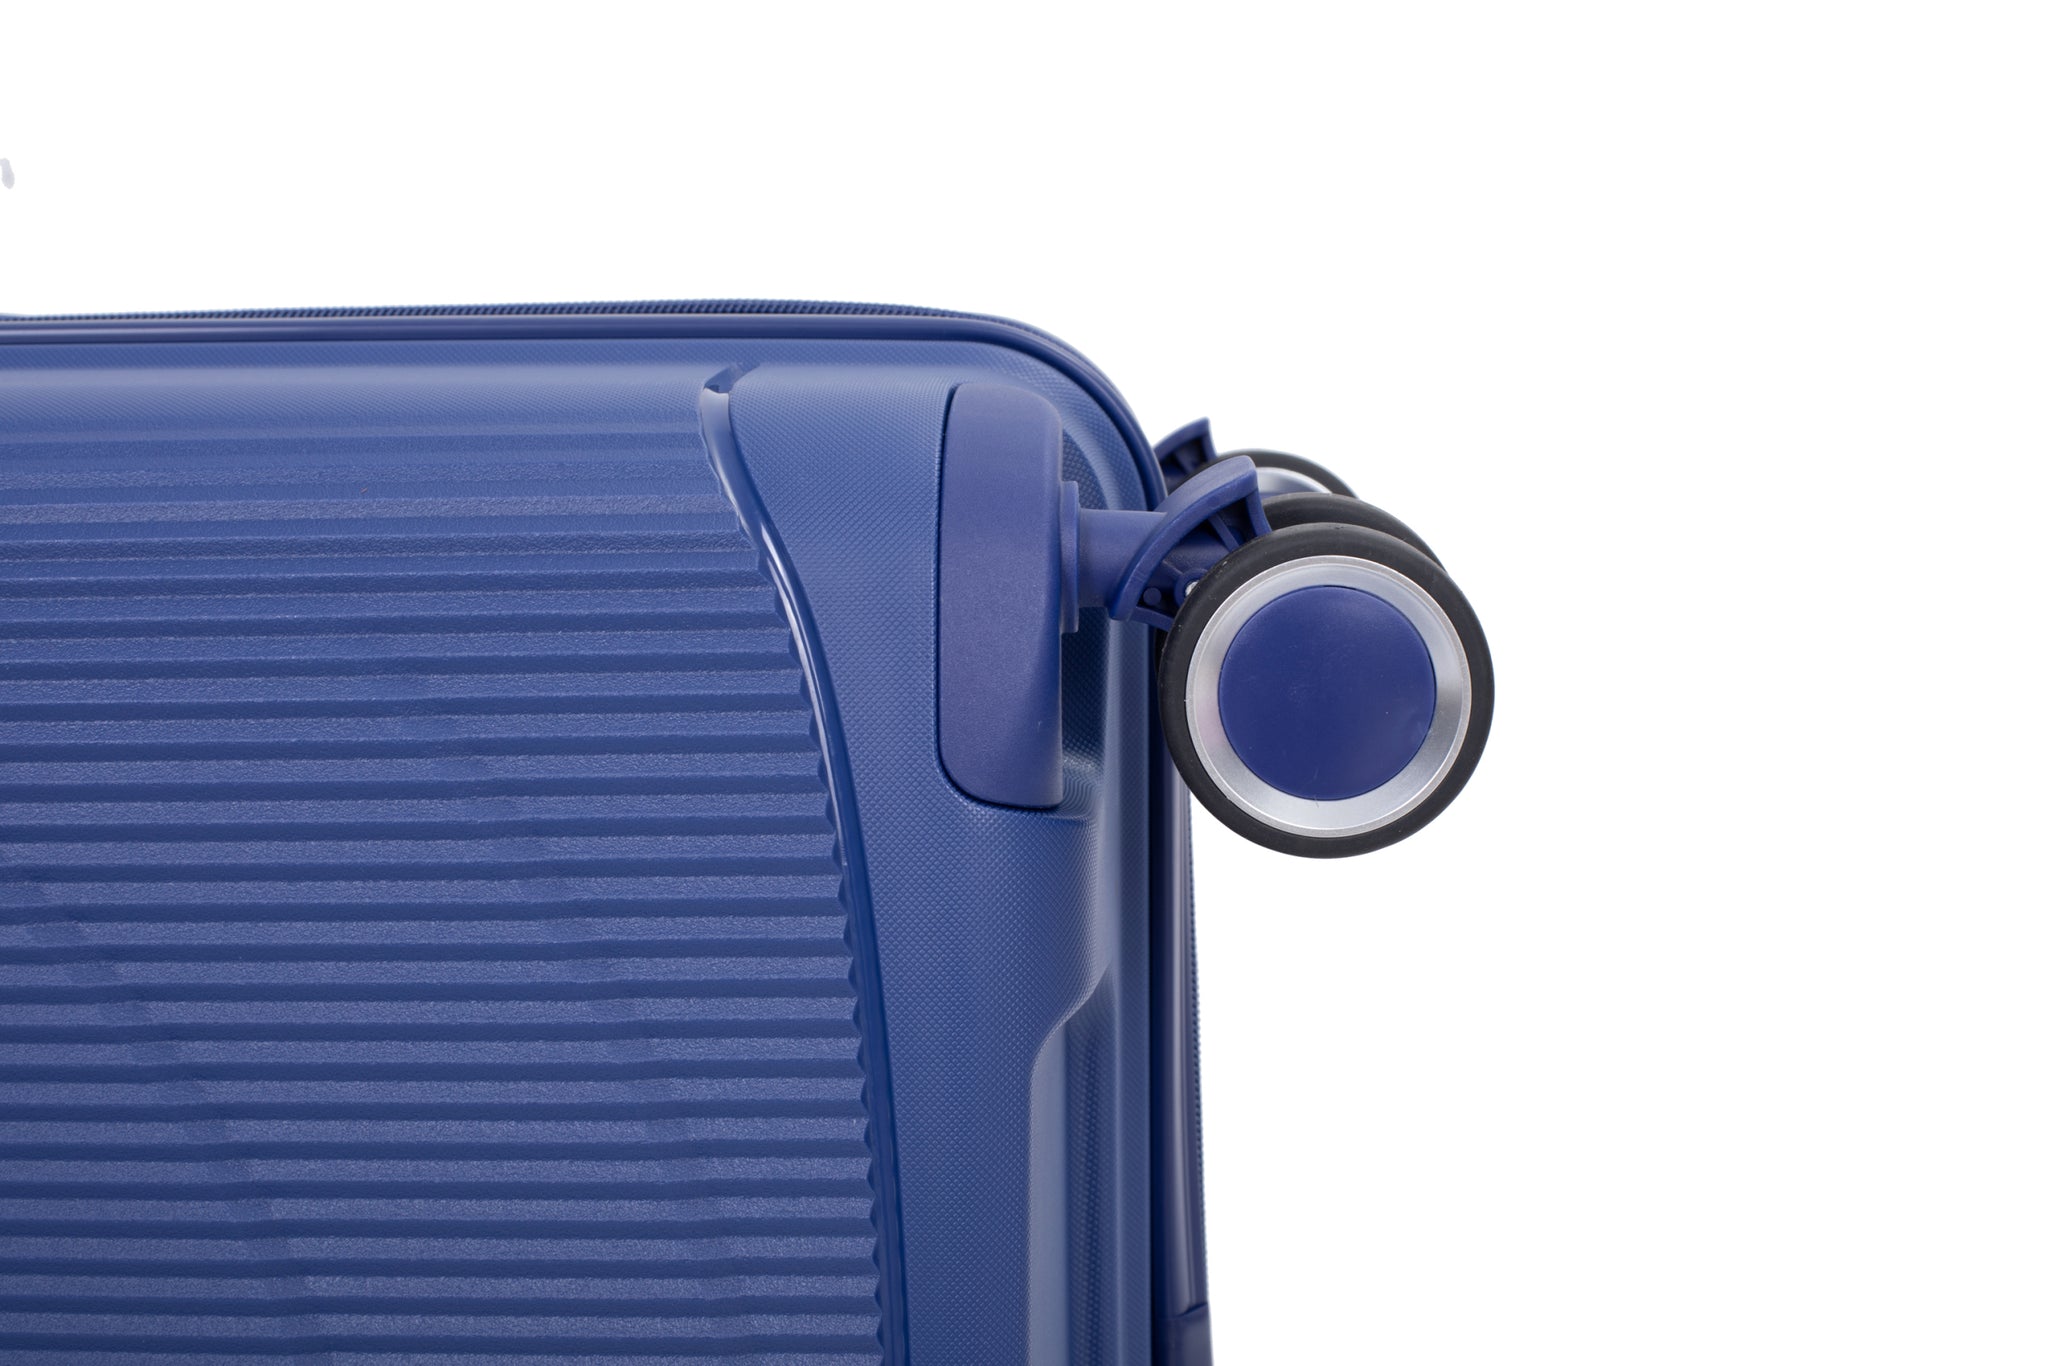 Expandable Hardshell Suitcase Double Spinner Wheels PP navy-polypropylene